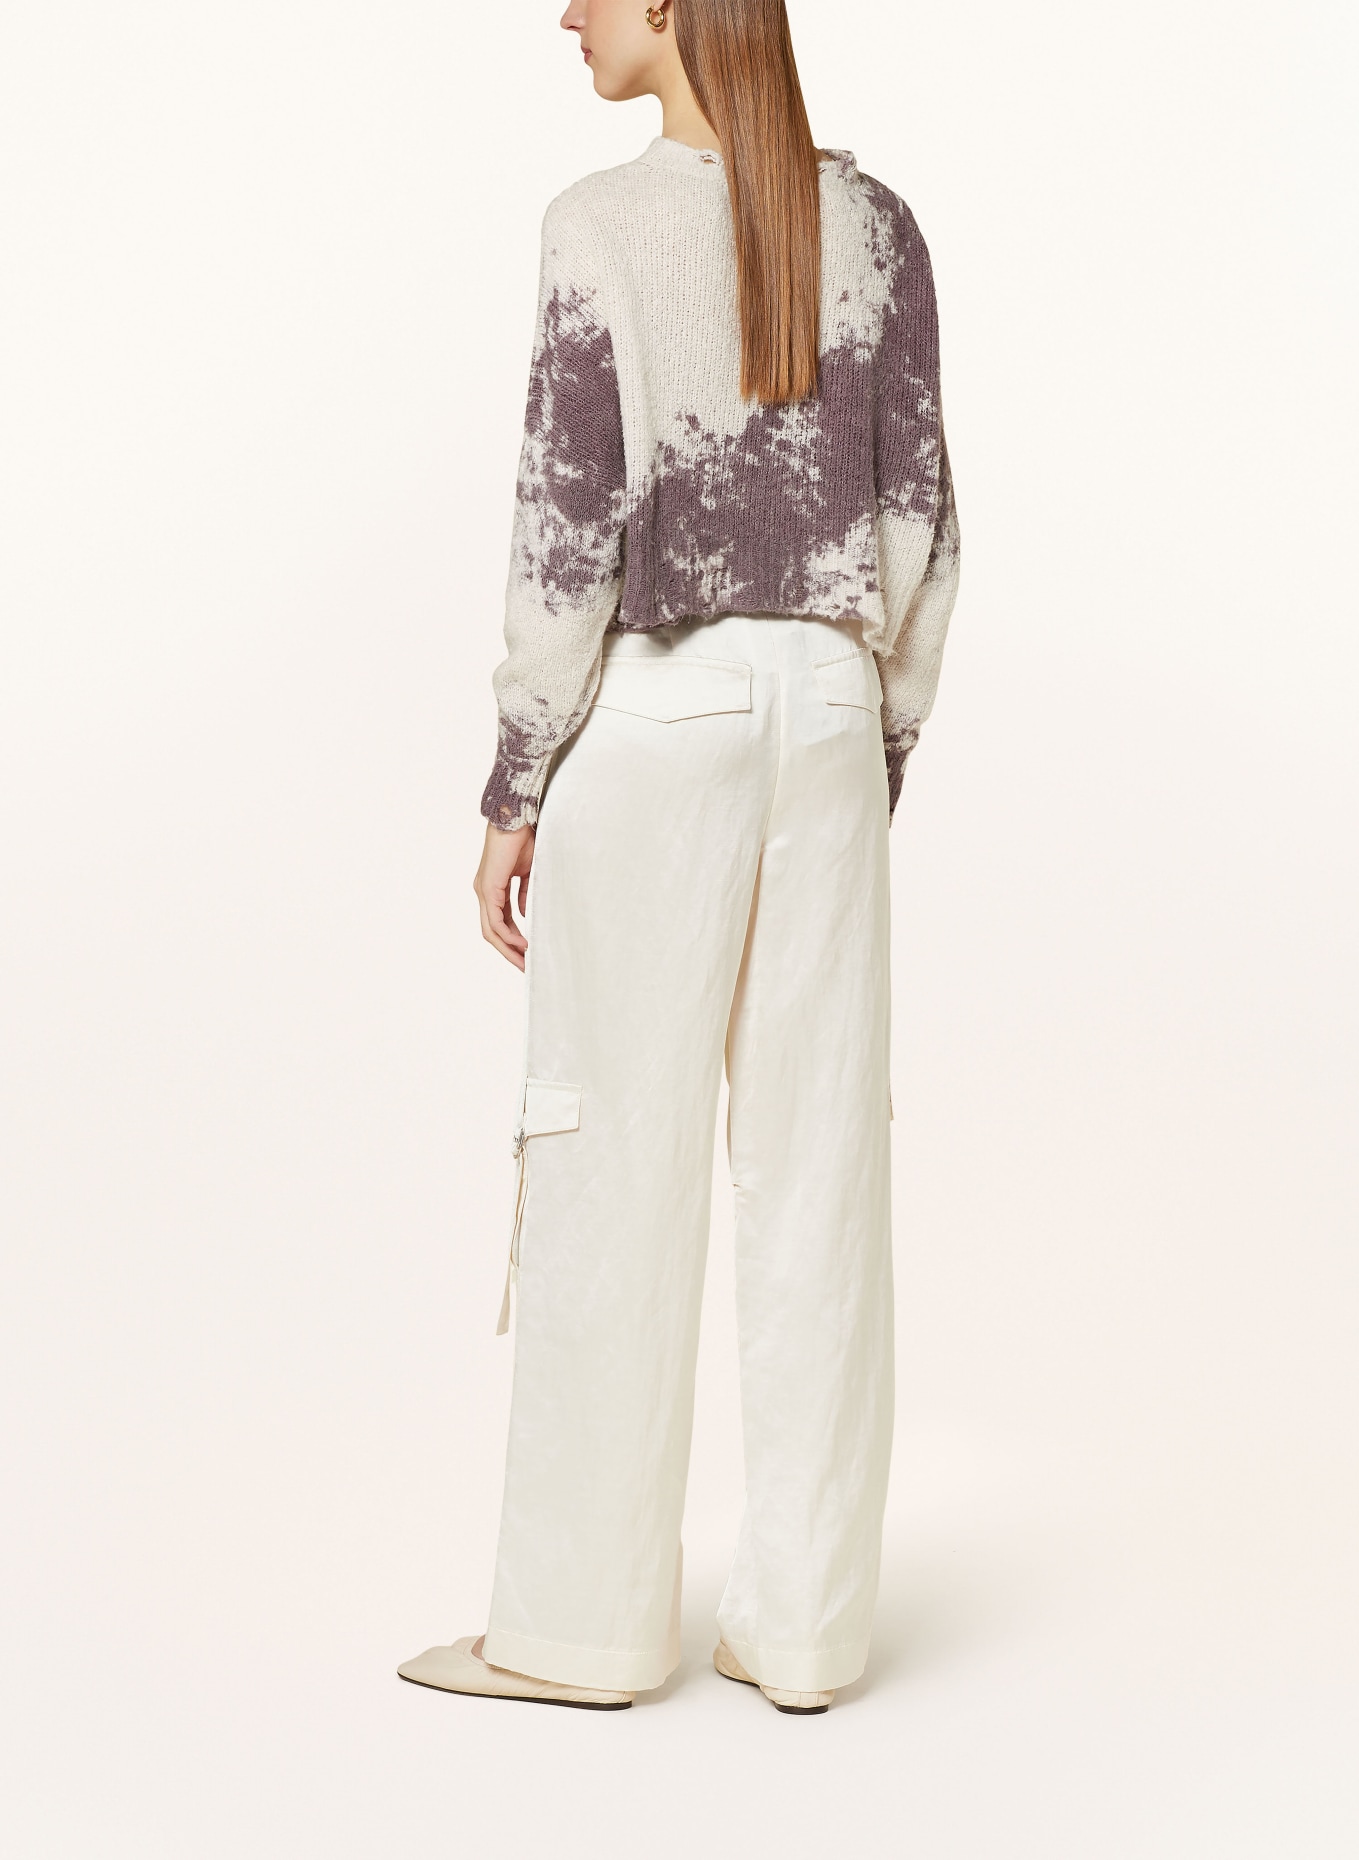 AVANT TOI Cropped-Pullover, Farbe: 18 lavender  grau lavendel (Bild 3)